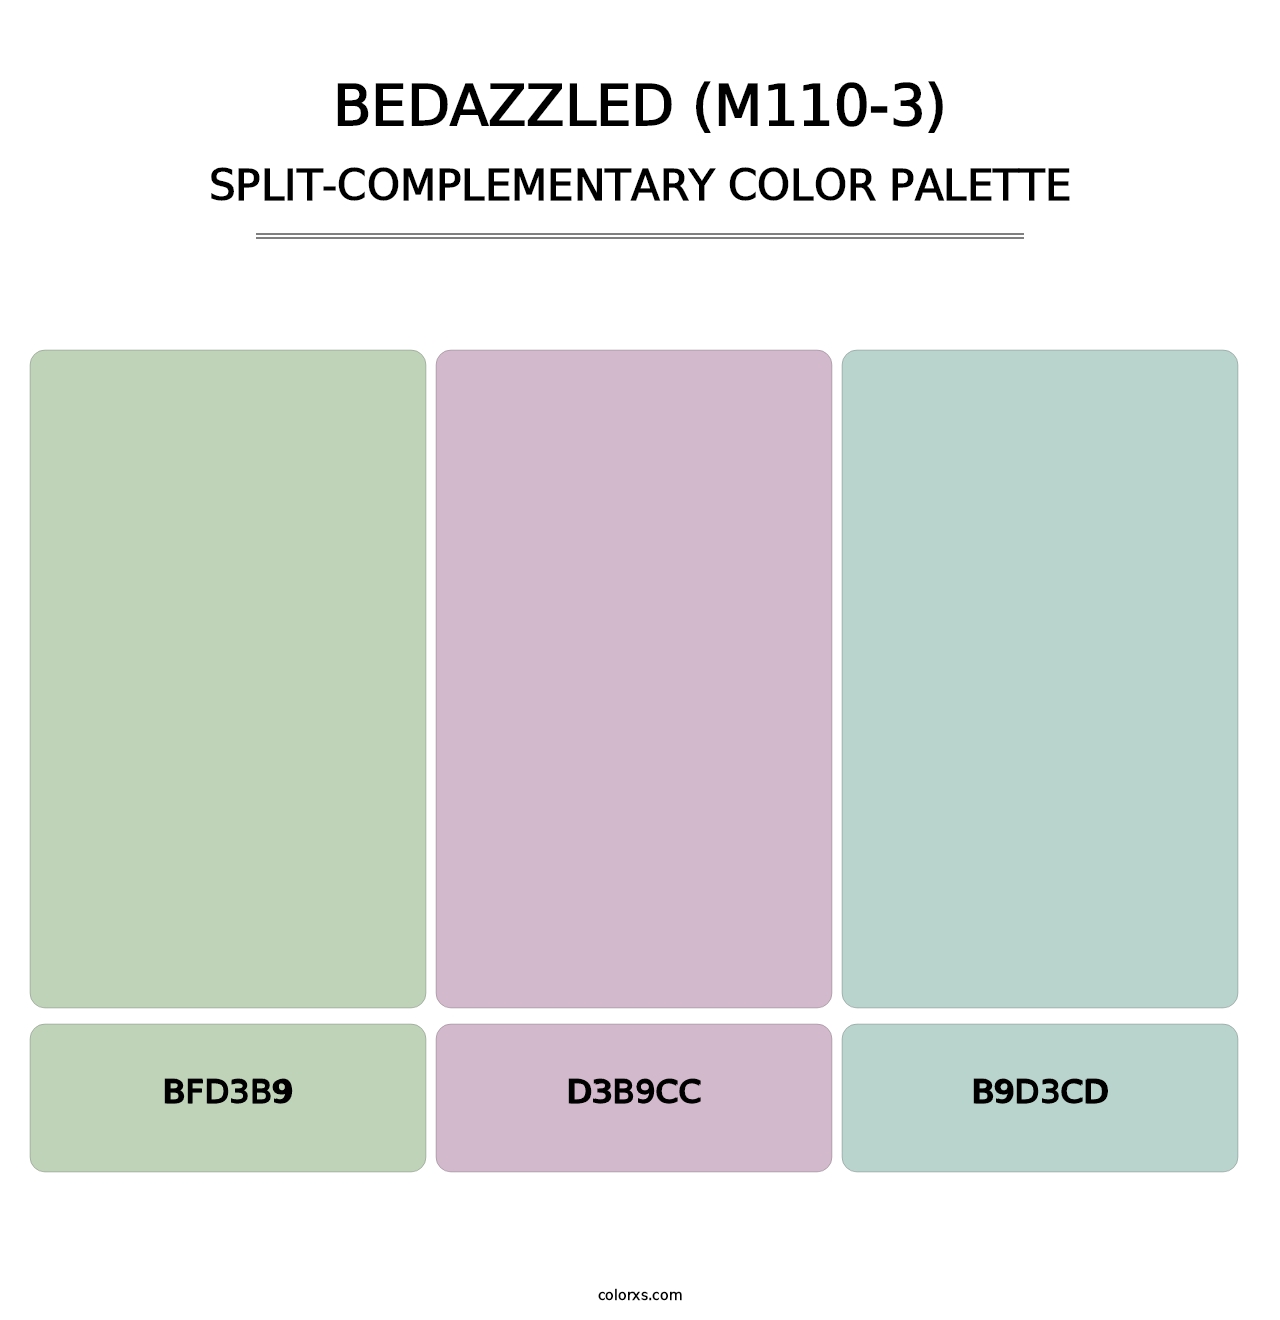 Bedazzled (M110-3) - Split-Complementary Color Palette